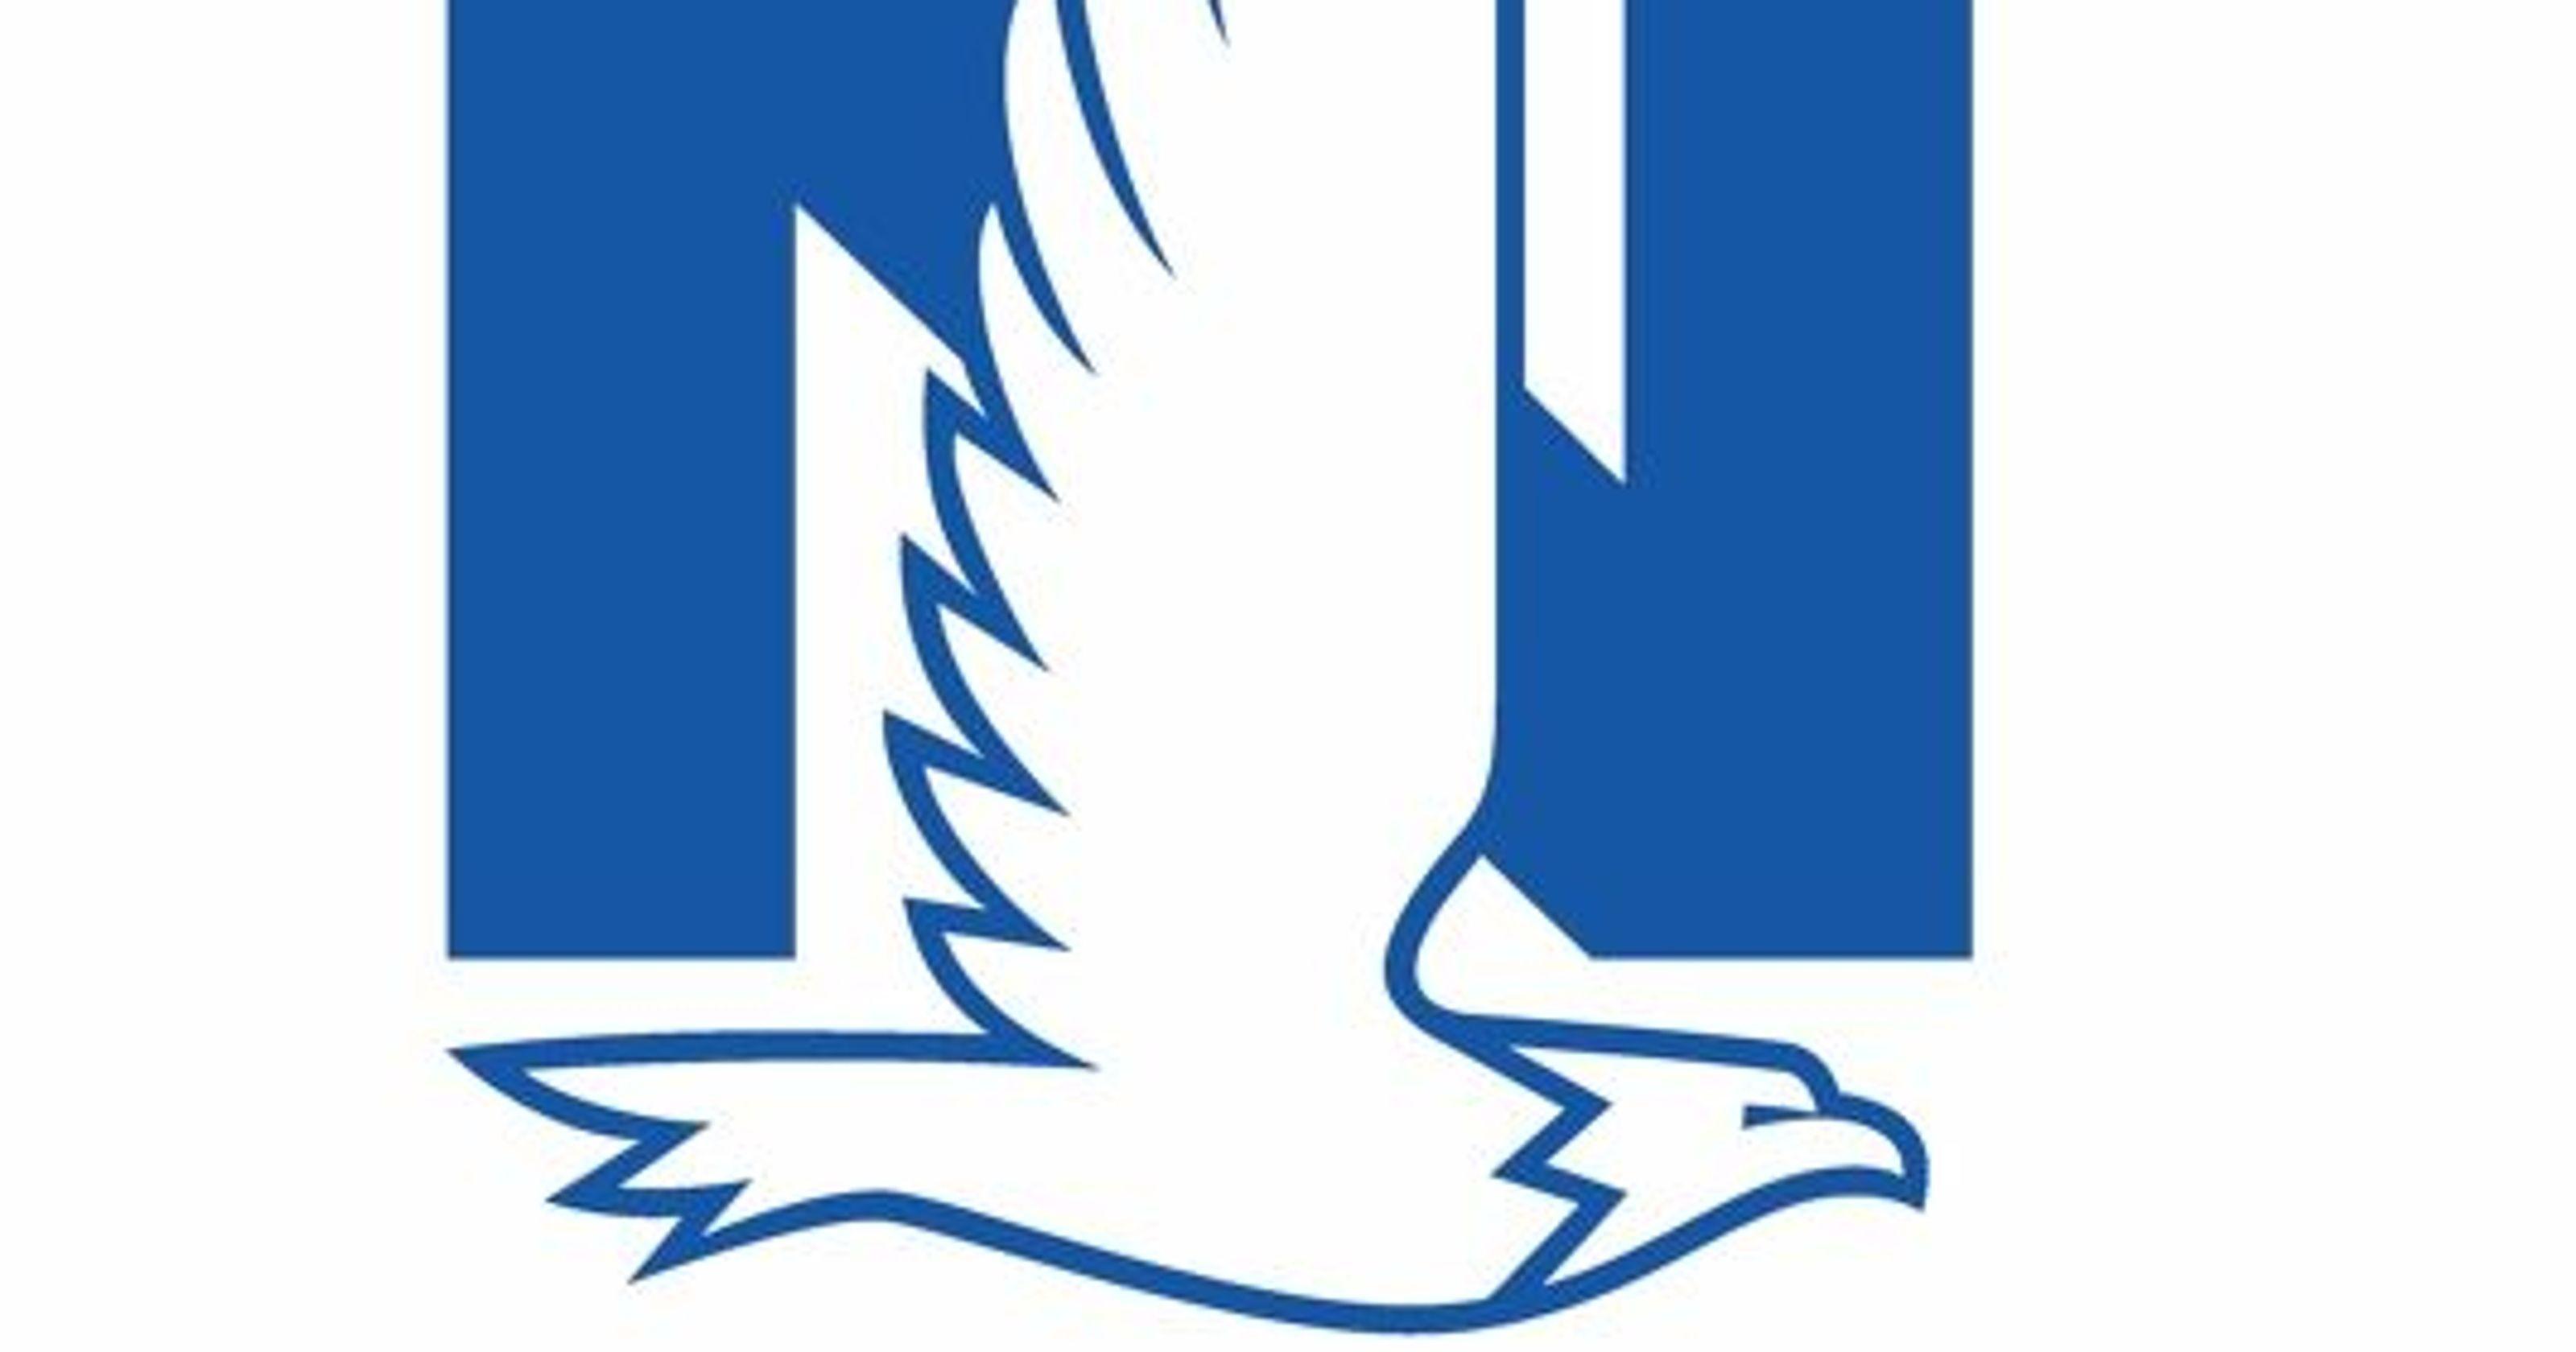 Nationwide Eagle Logo - Nationwide to consolidate brands, bring back eagle logo